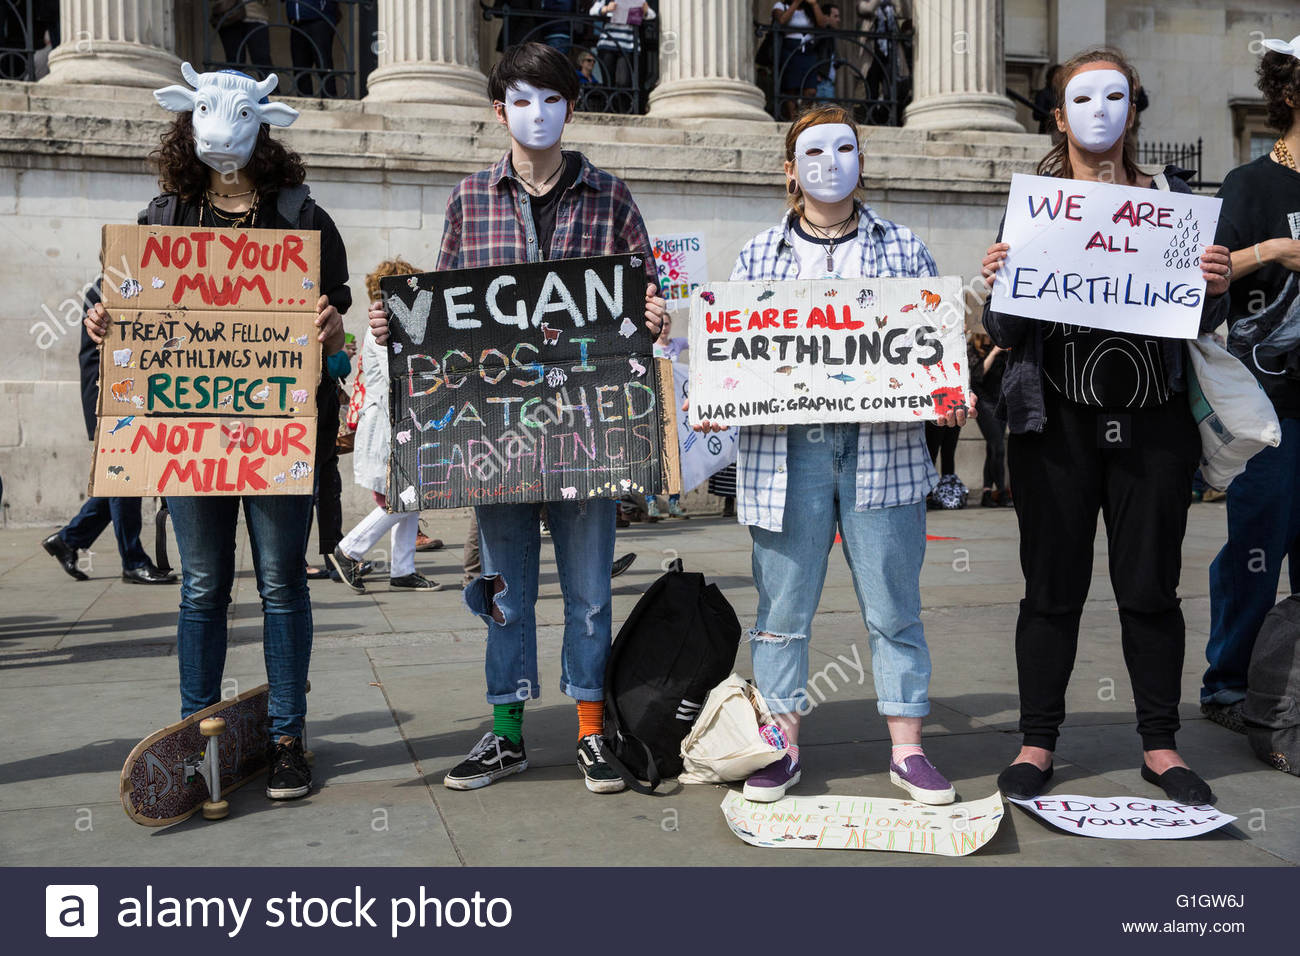 london-uk-14th-may-2016-vegan-activists-take-part-in-an-international-g1gw6j.jpg